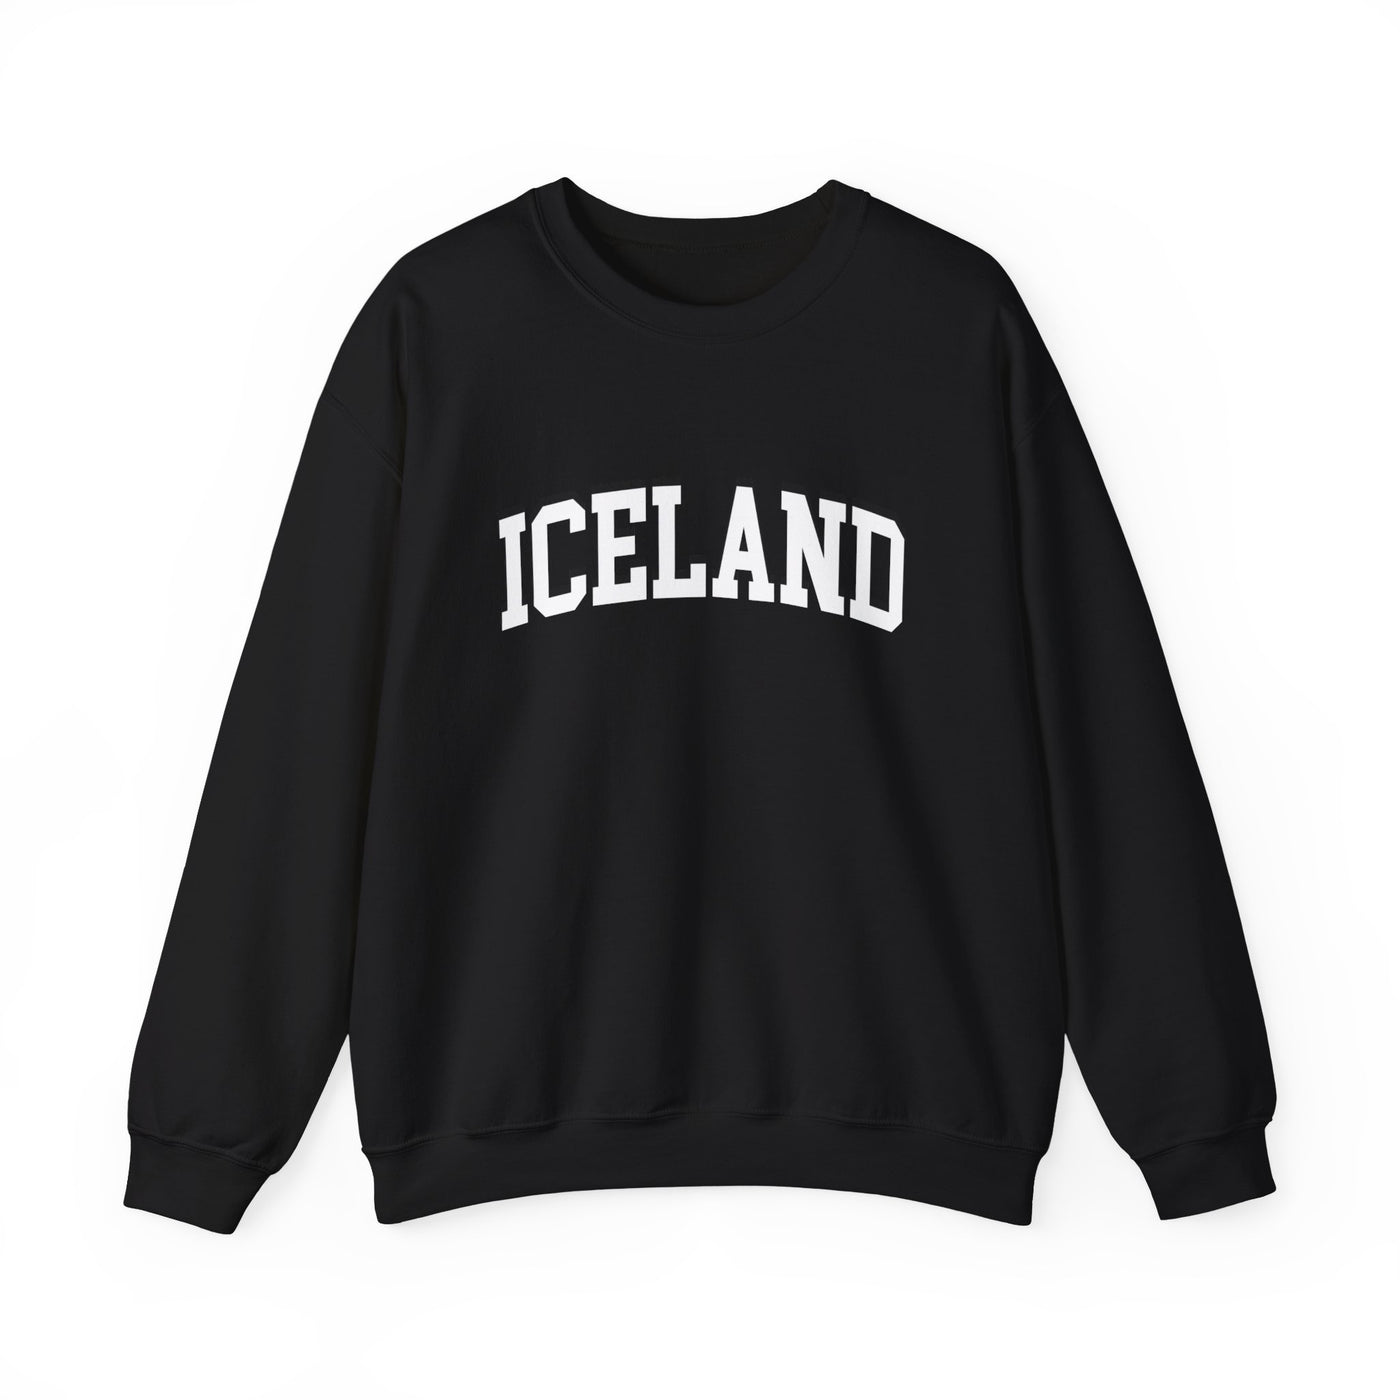 Iceland University Sweatshirt